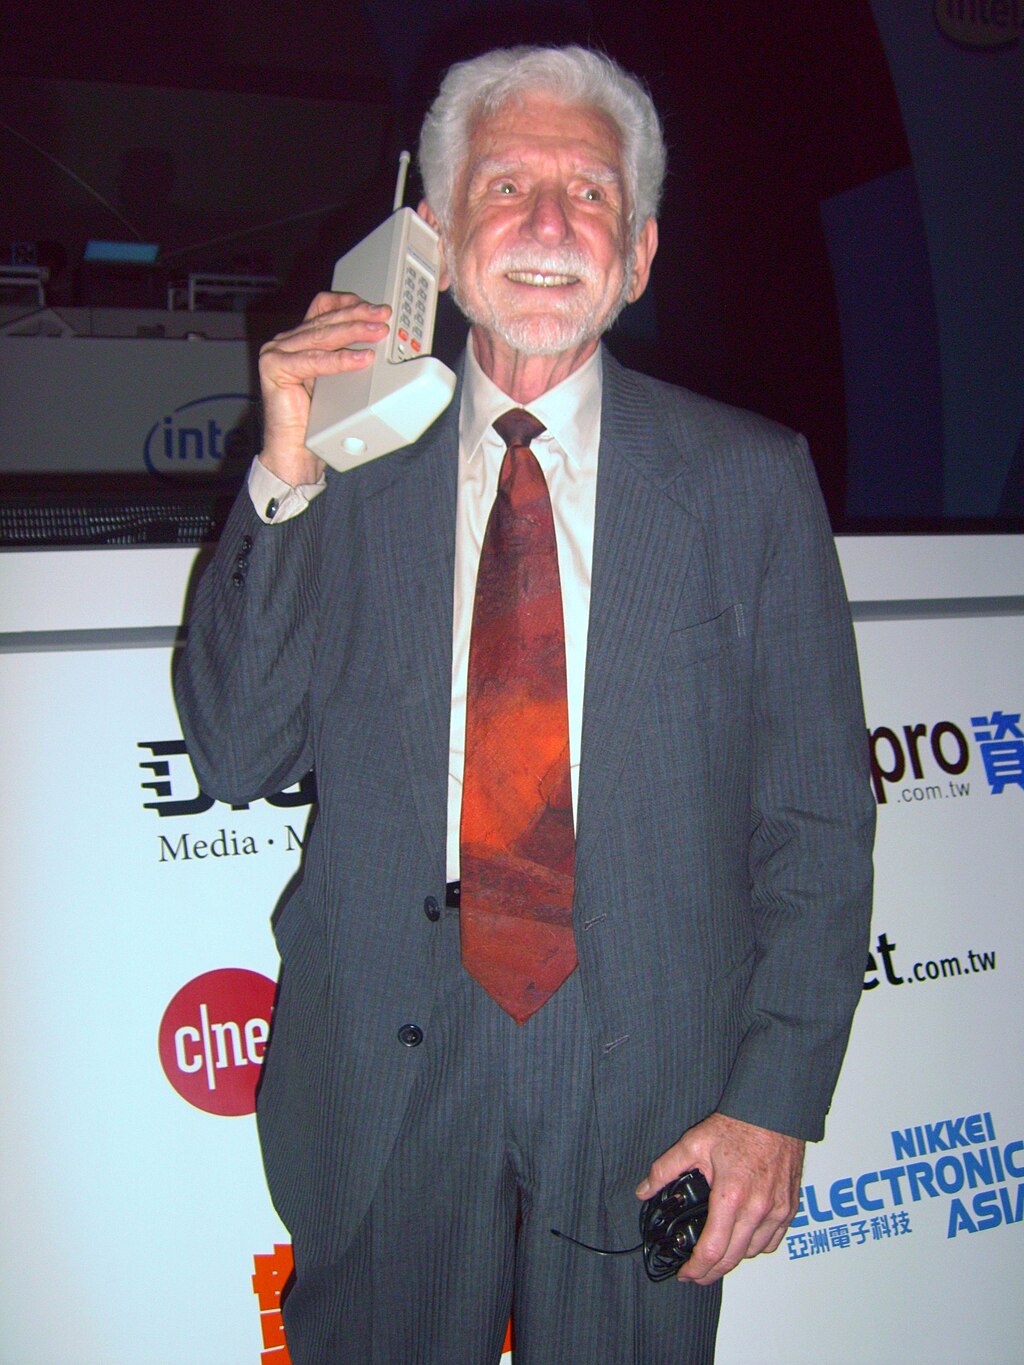 Martin cooper holding the original motorola phone